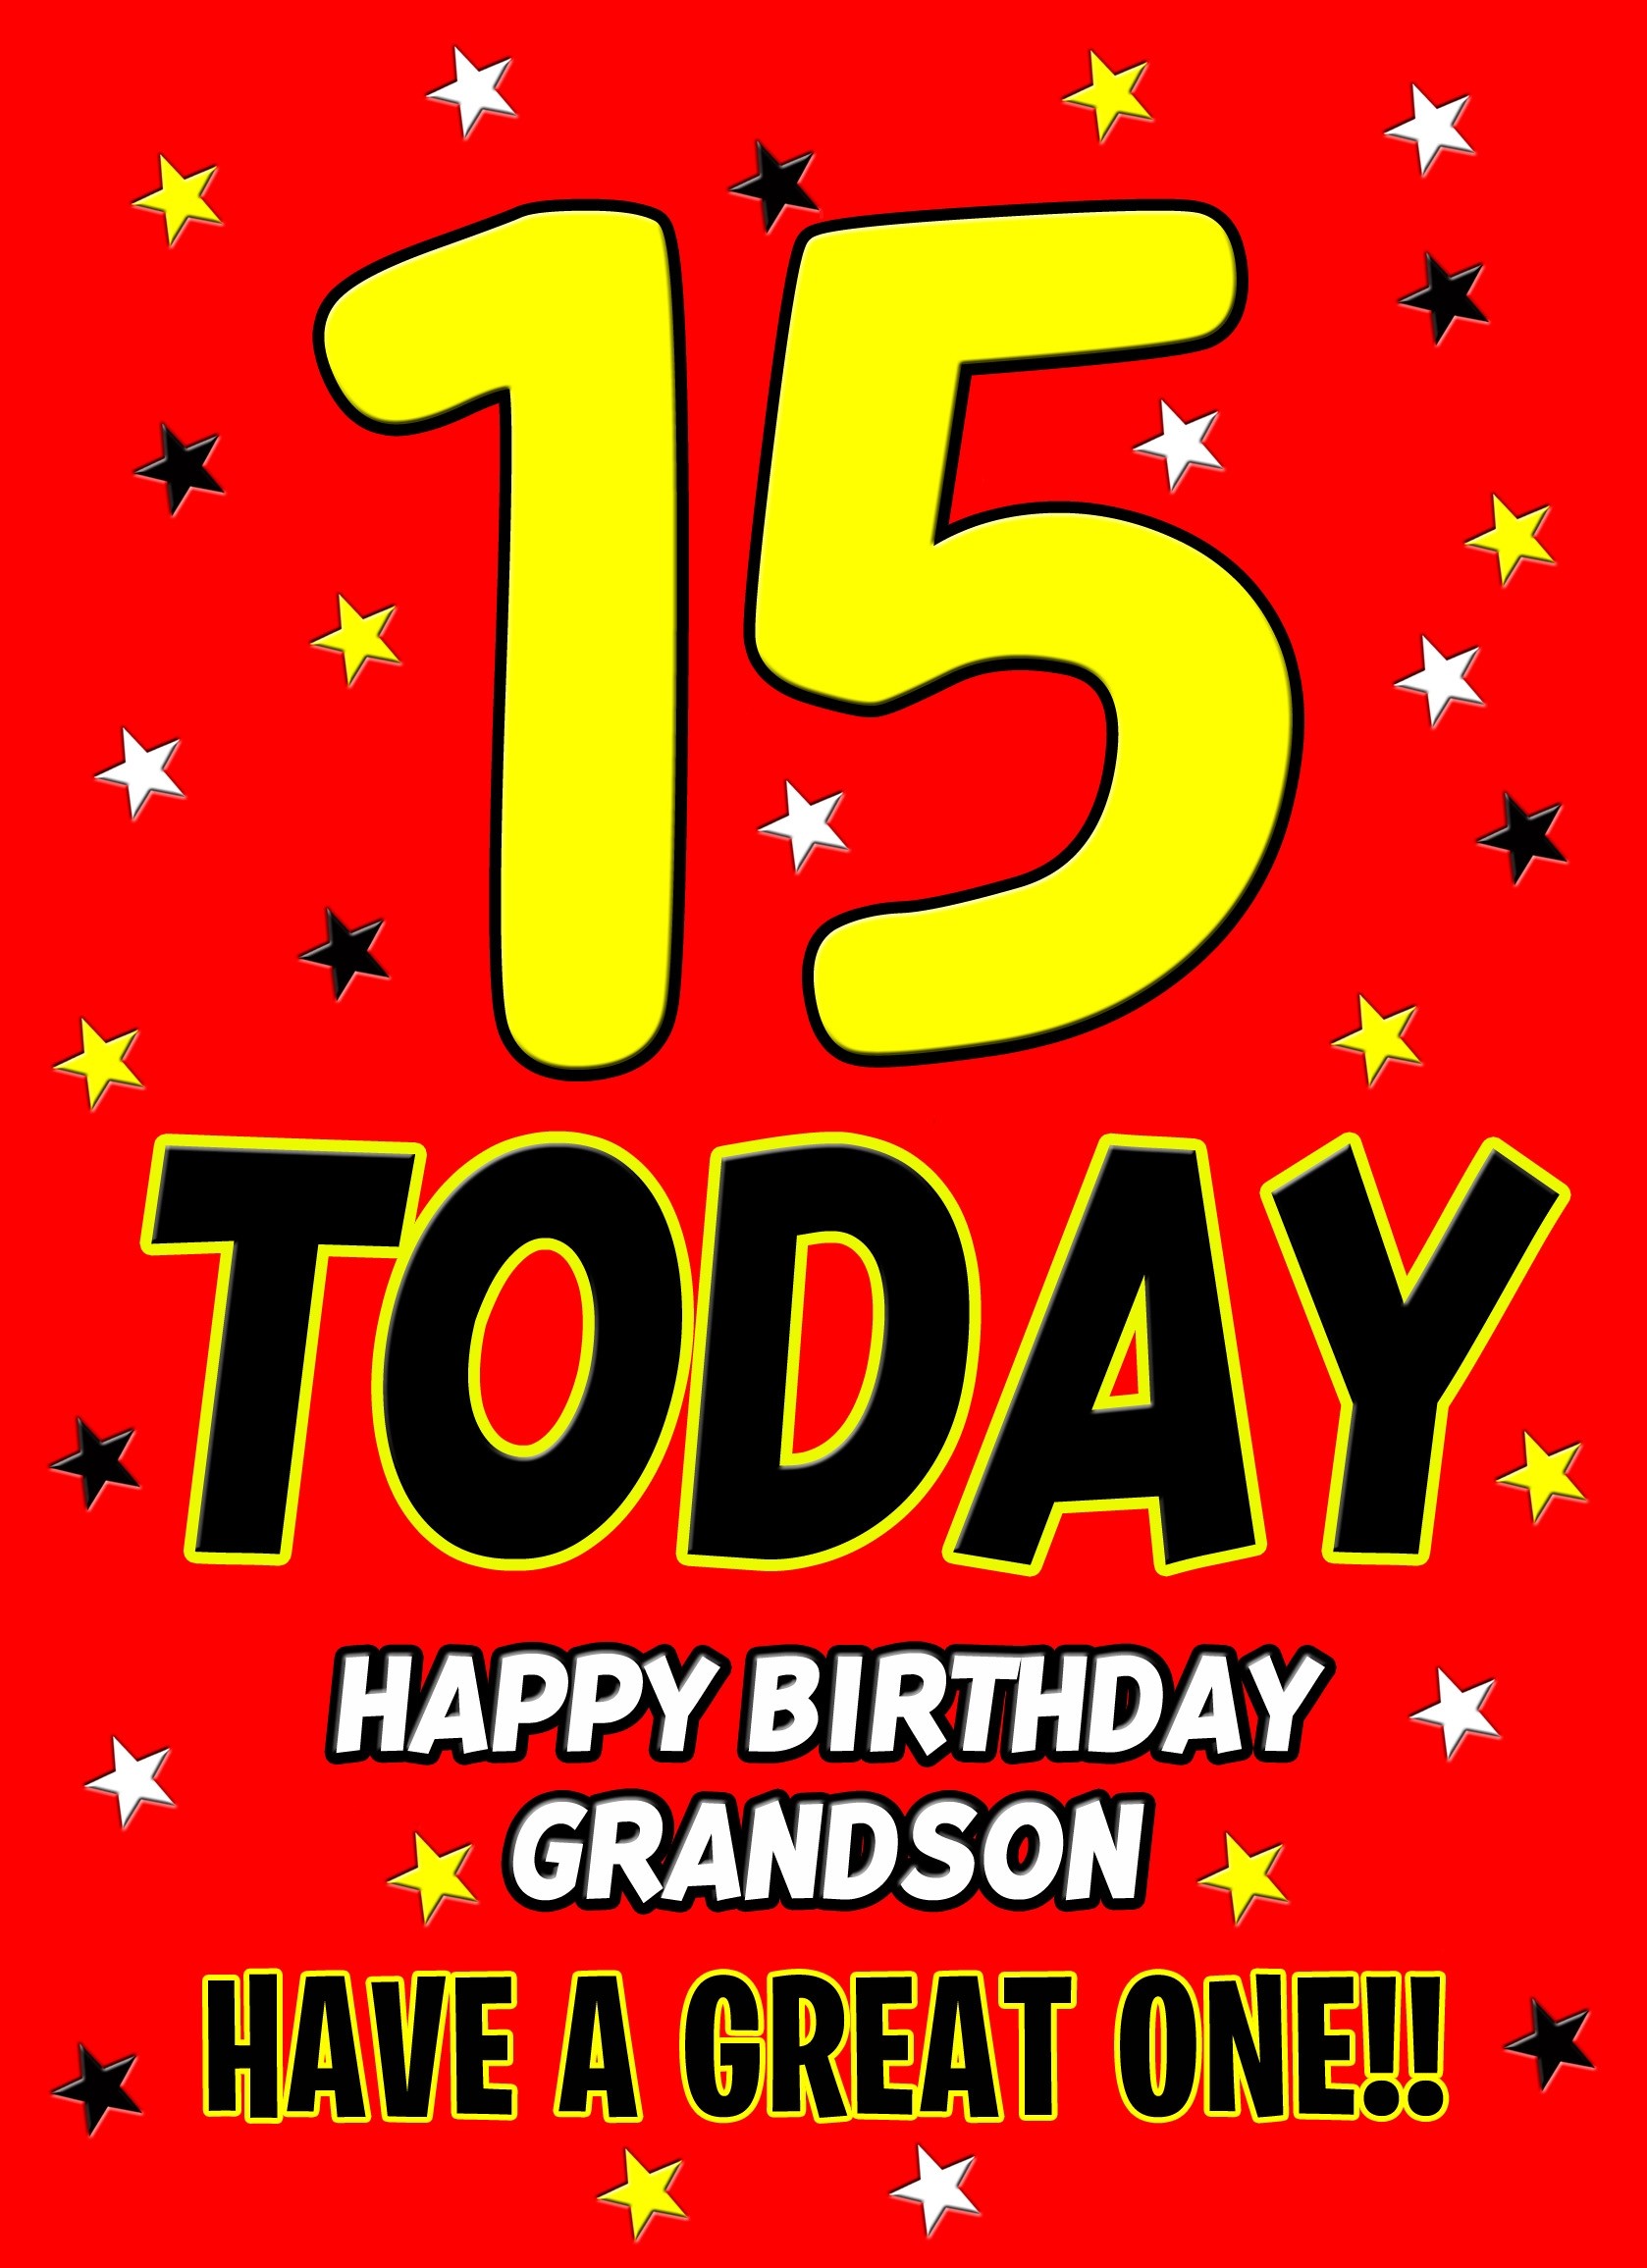 15 Today Birthday Card (Grandson)